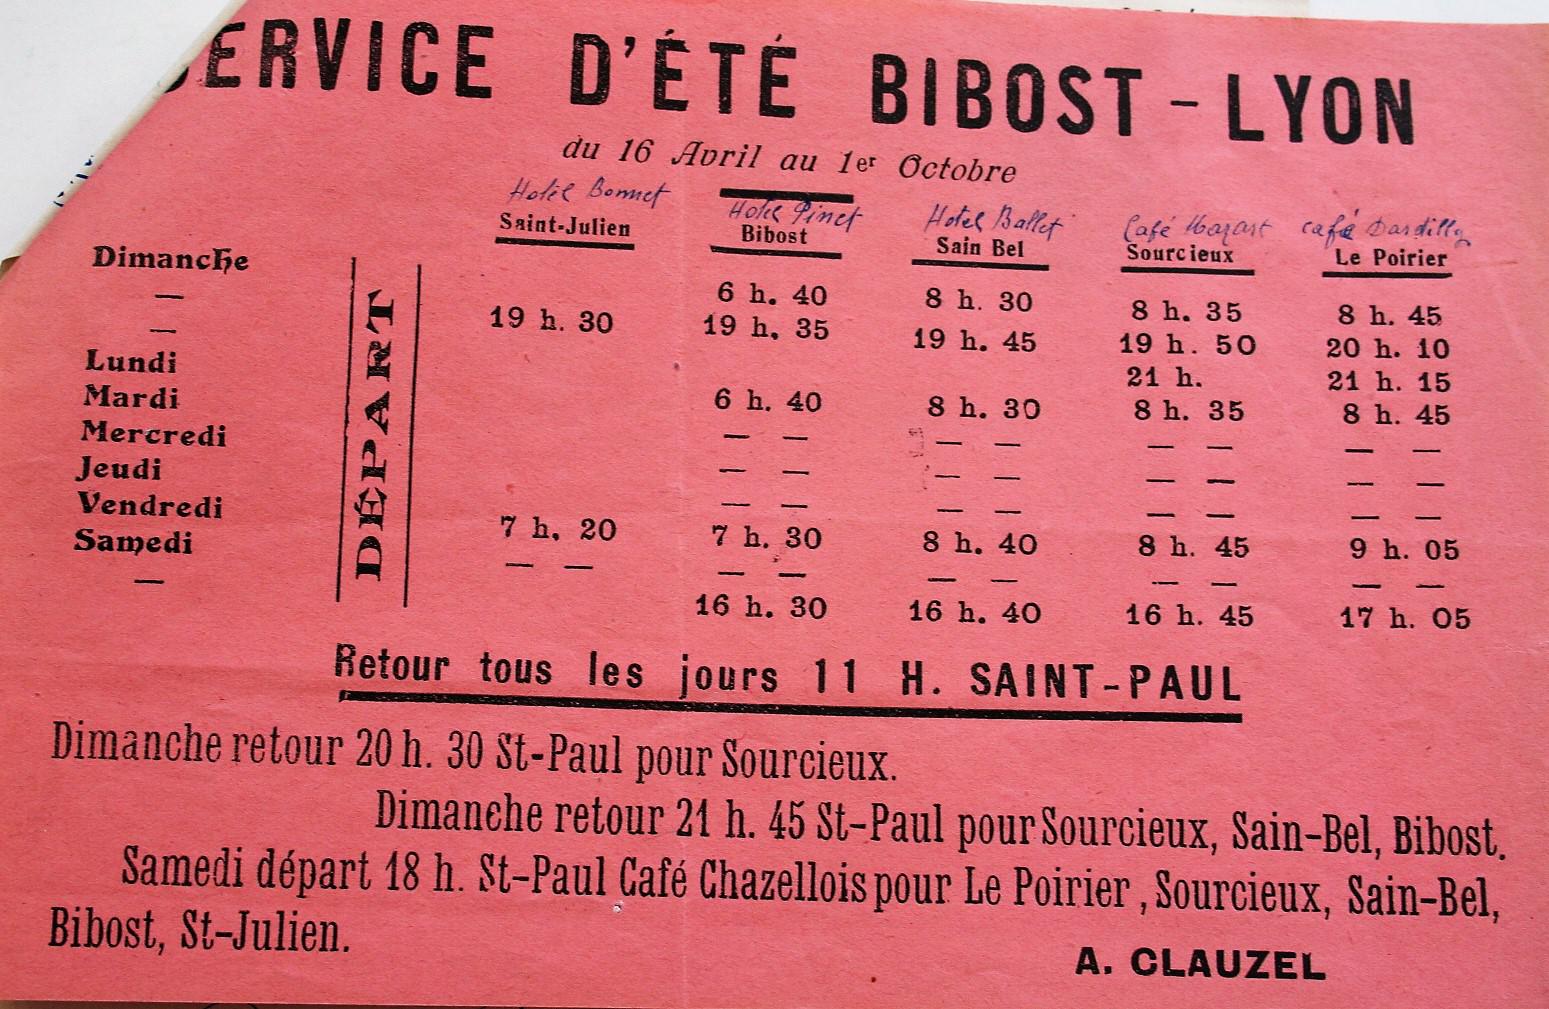 1934 timetable